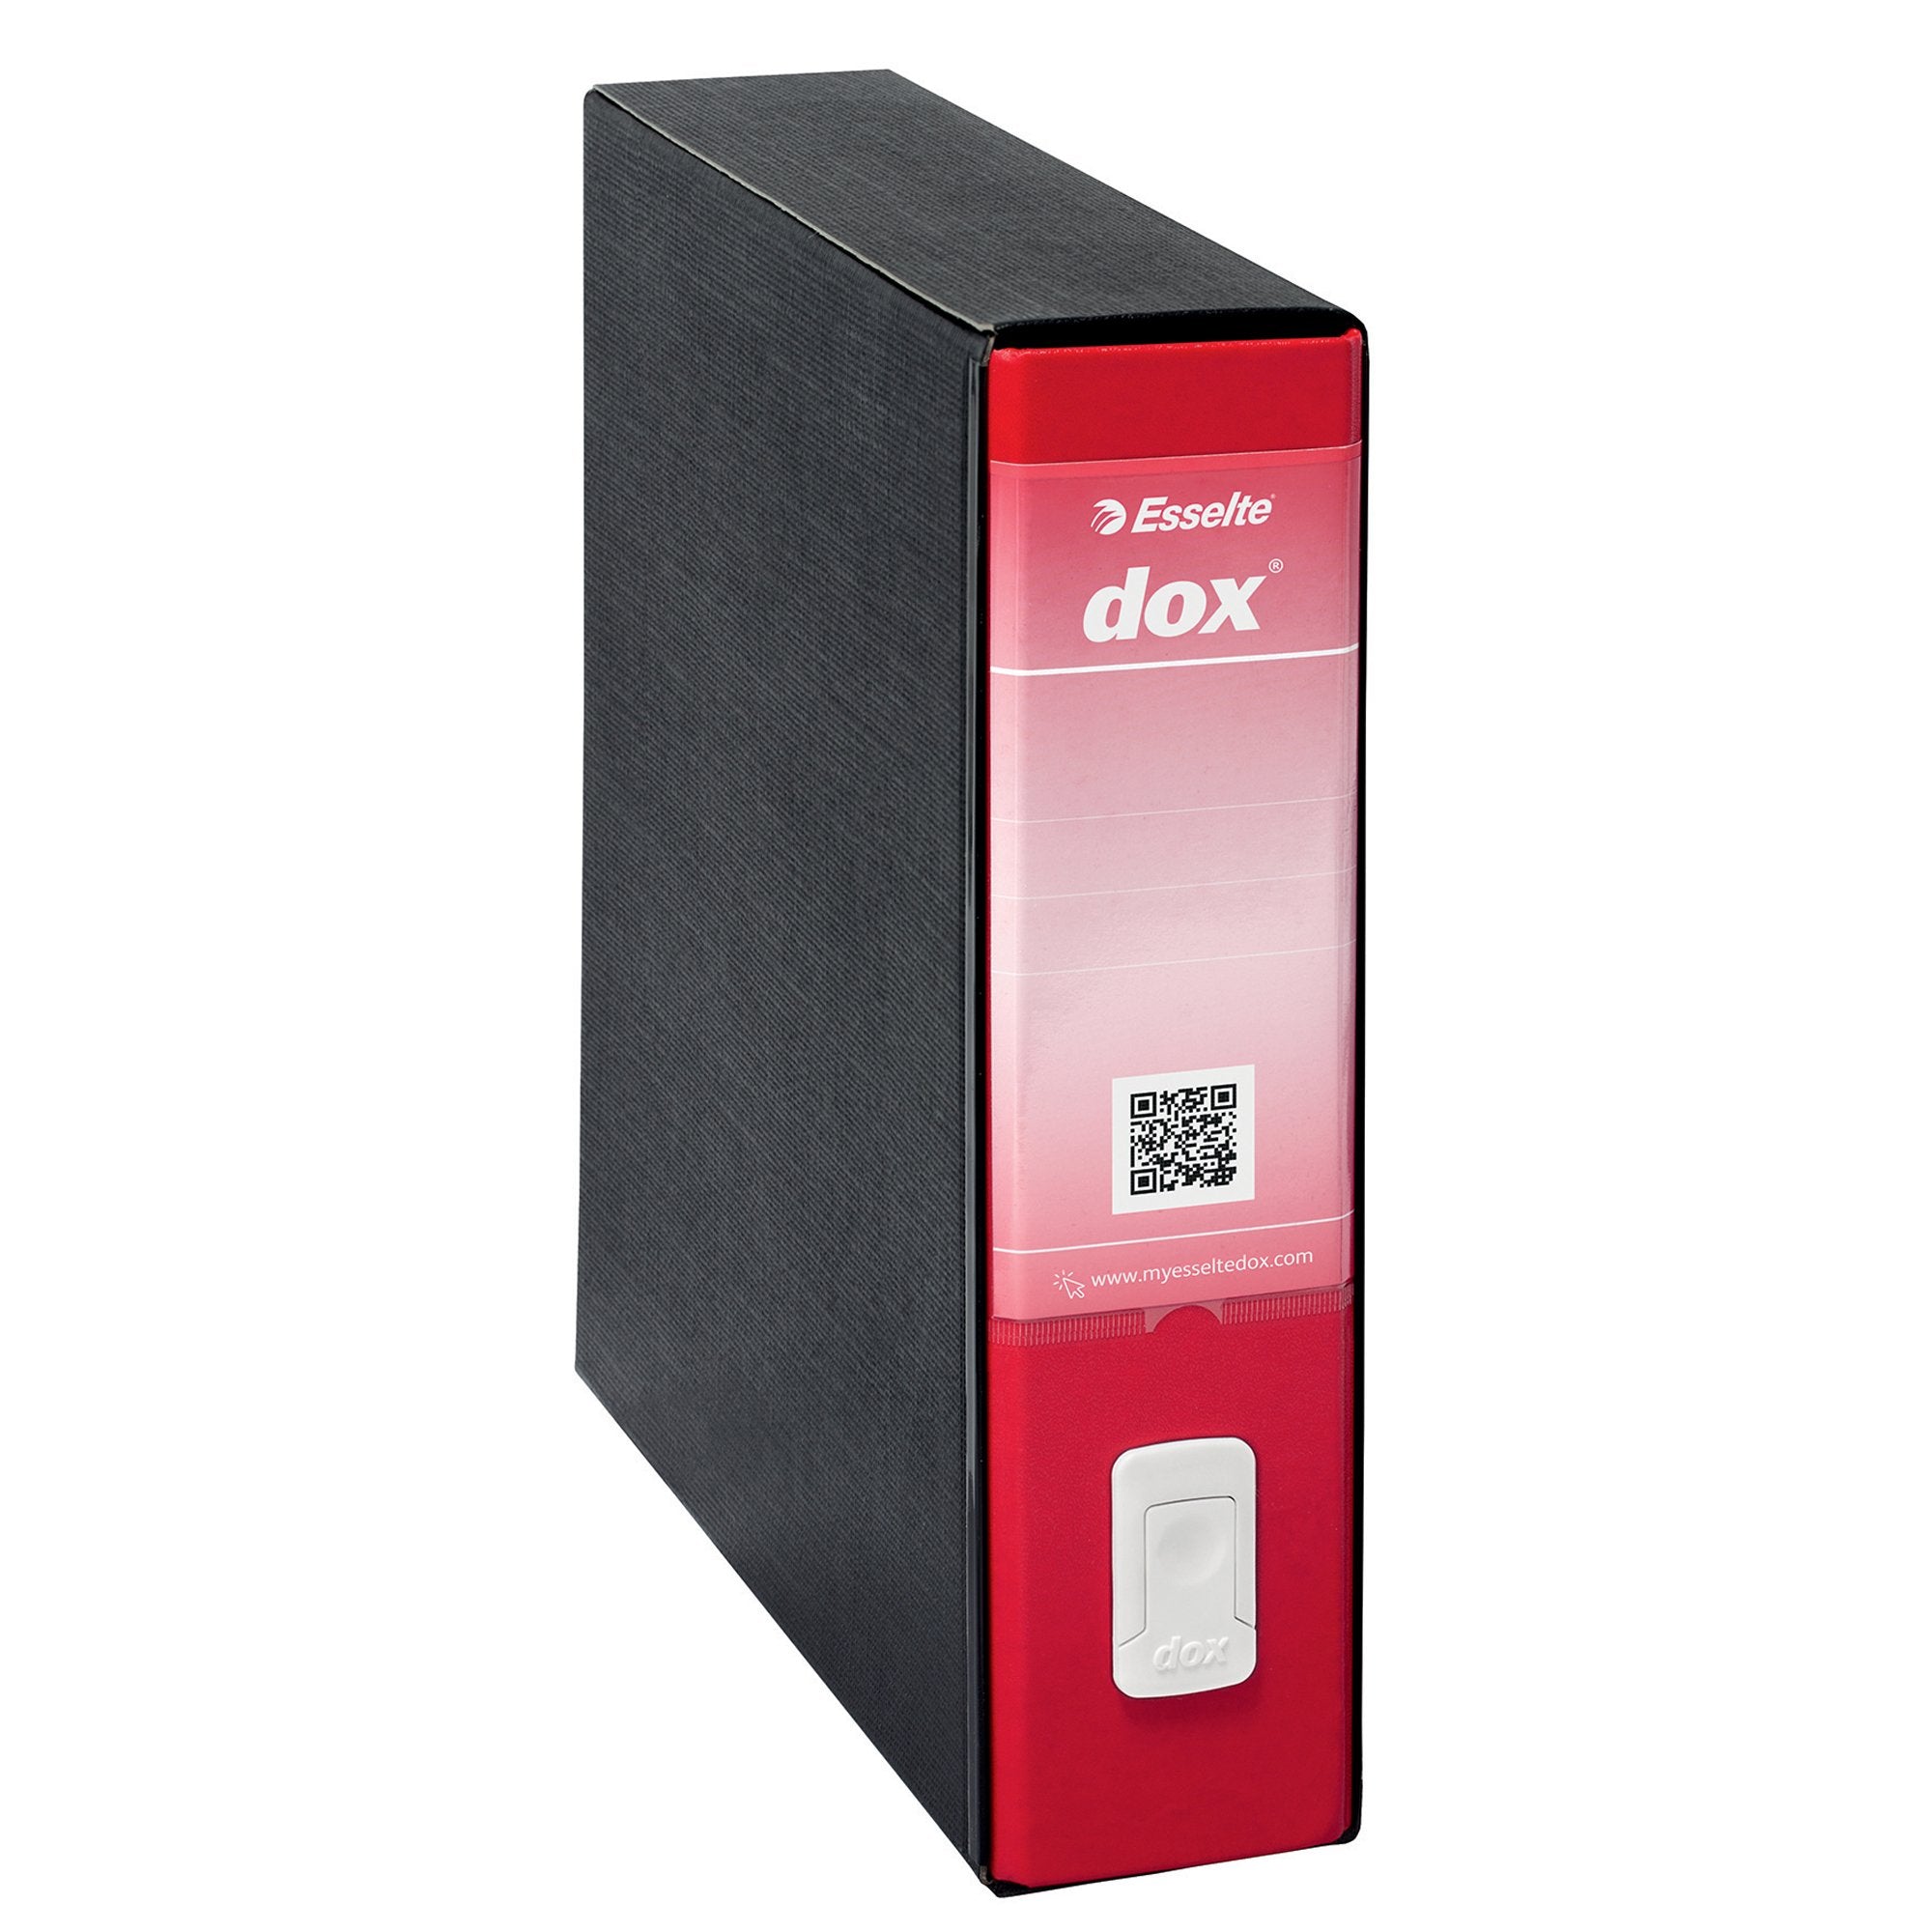 dox-registratore-9-rosso-35x31-5cm-dorso-8cm-esselte